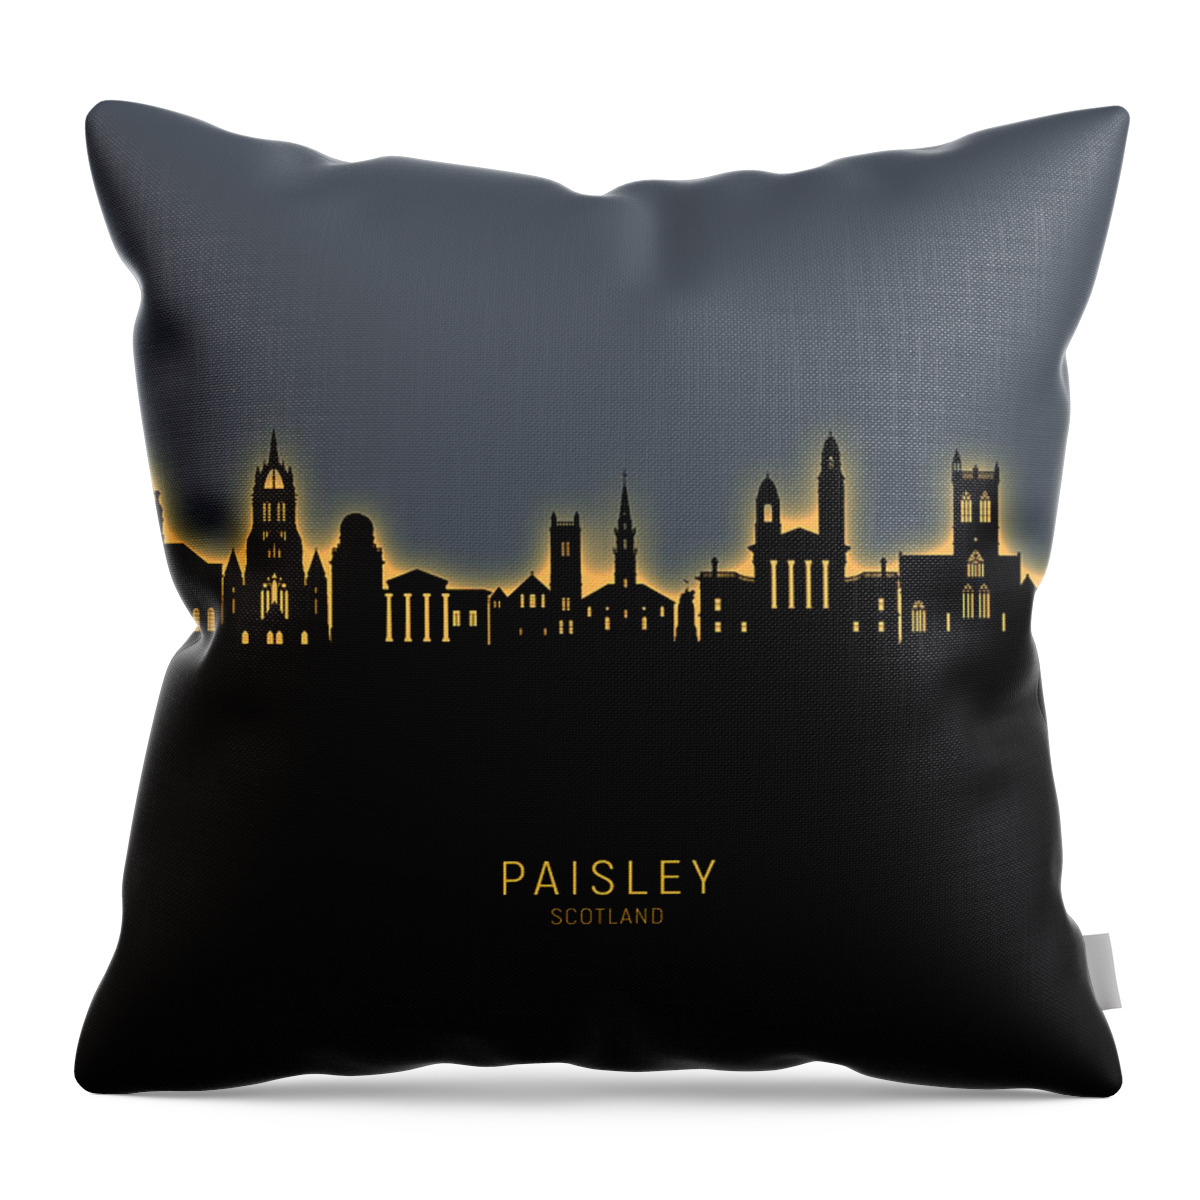 Paisley Throw Pillow featuring the digital art Paisley Scotland Skyline #10 by Michael Tompsett